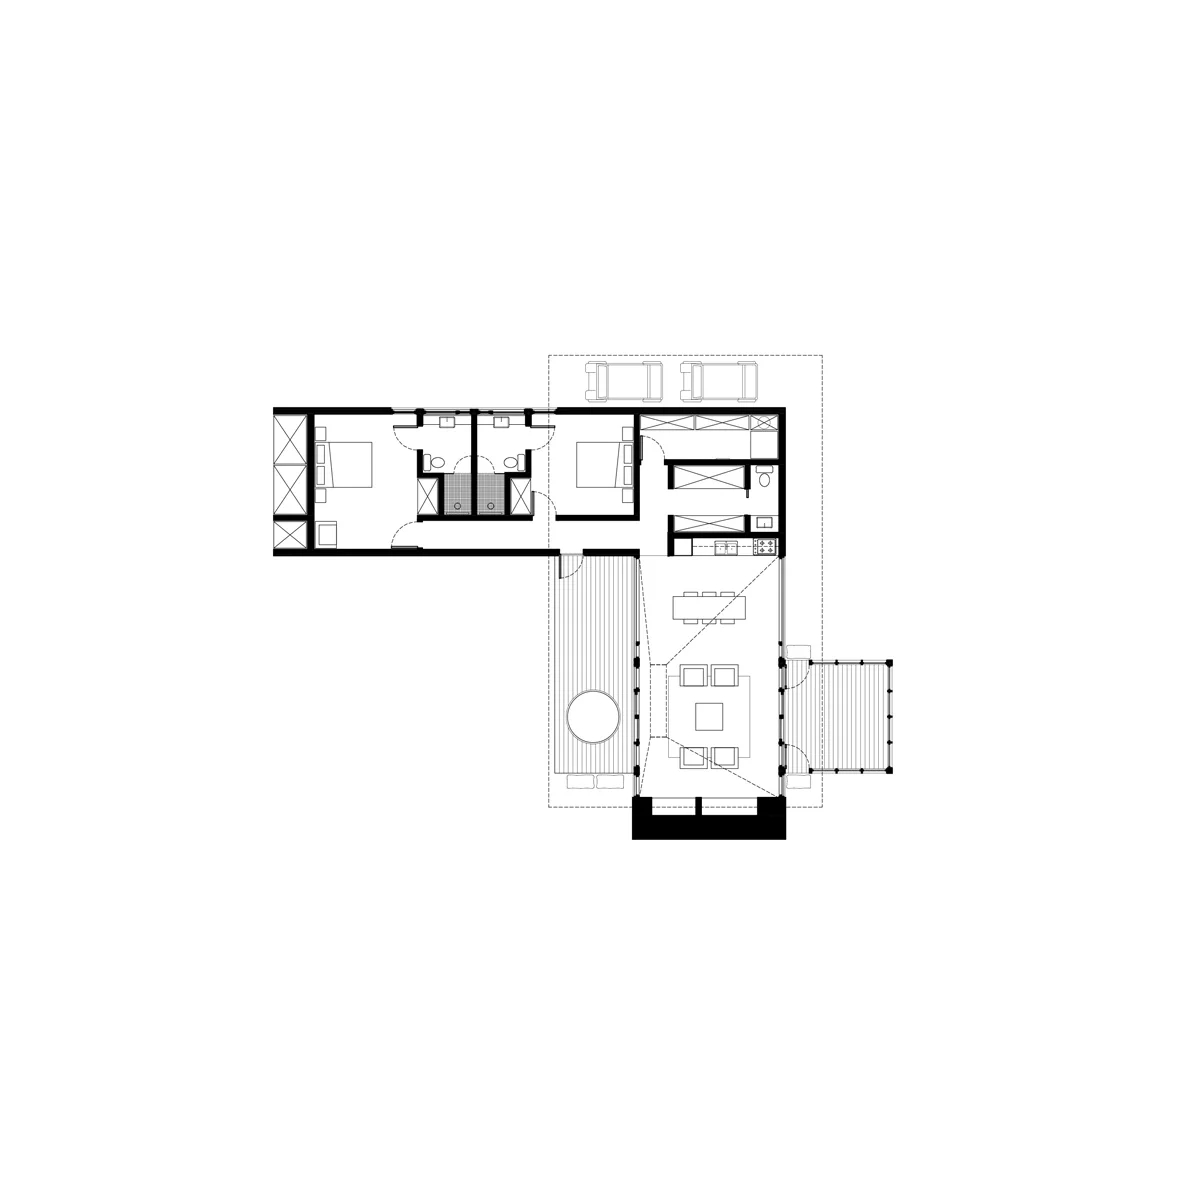 mackay-lyons-sweetapple-architects-bigwin-island-club-cabins-designboom-015.webp.jpg